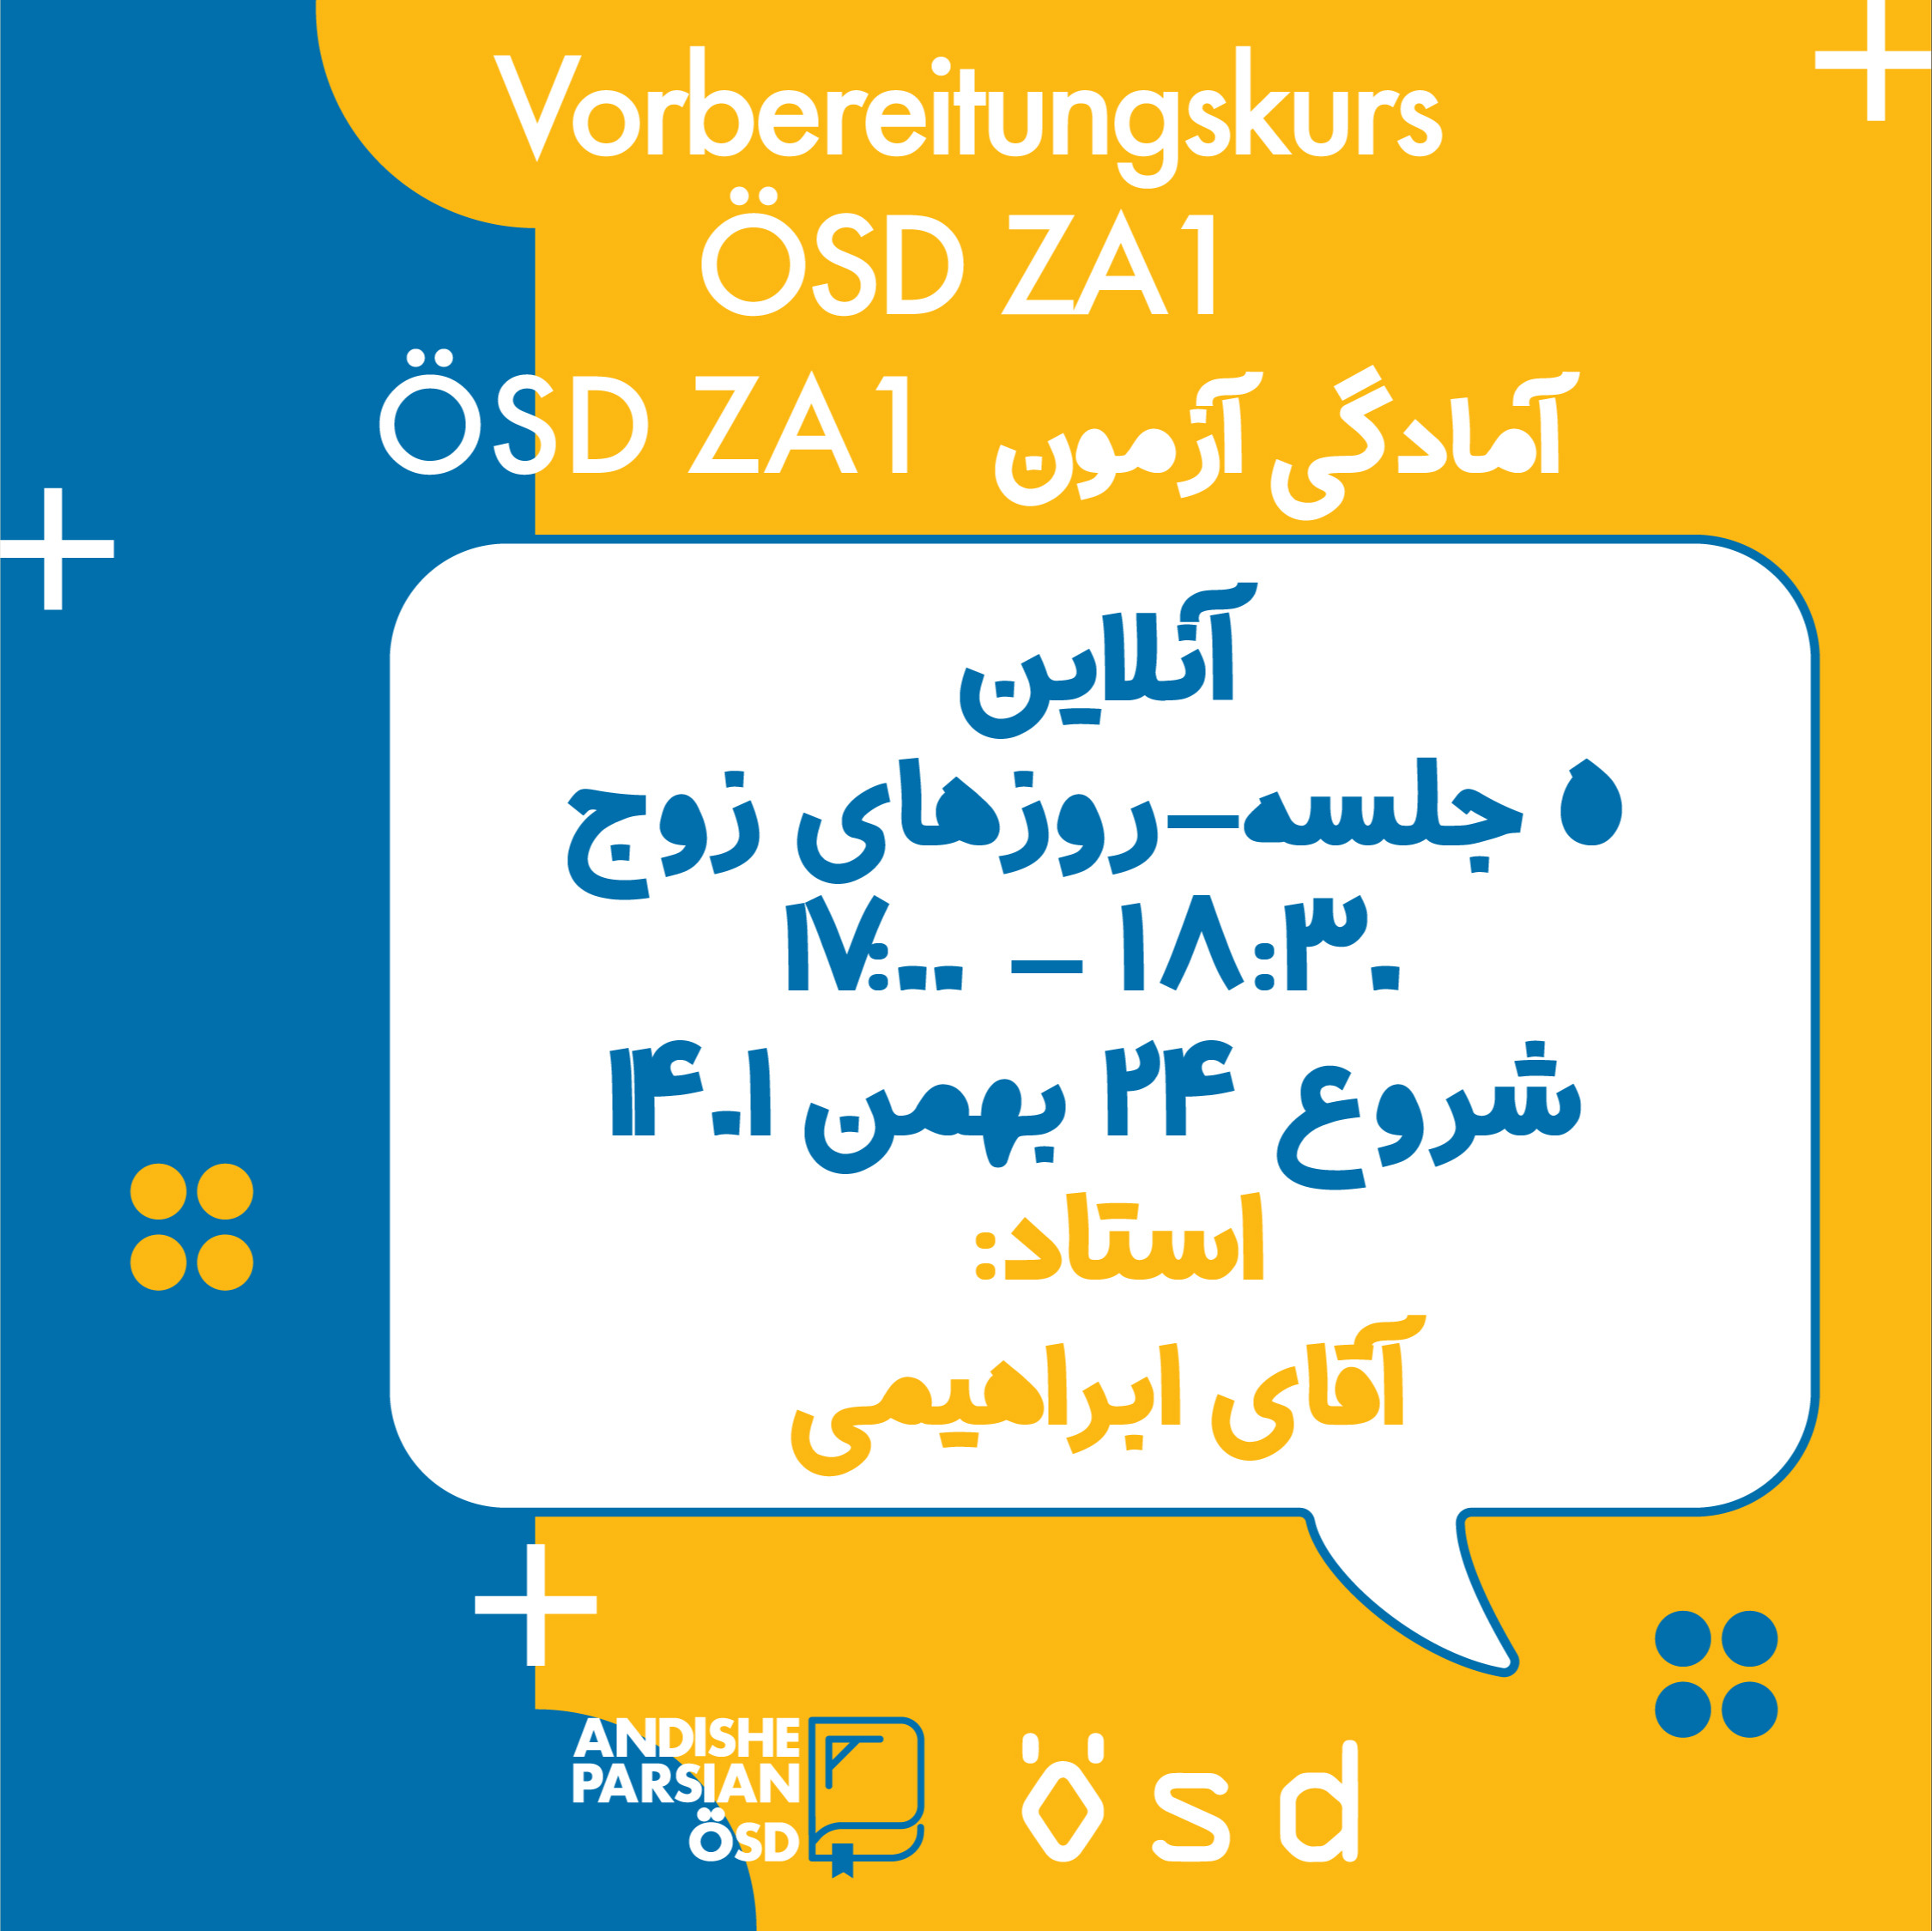 کلاس آمادگی آزمون ÖSD ZA1 Vorbereitungskurs ÖSD ZA1 بهمن ماه